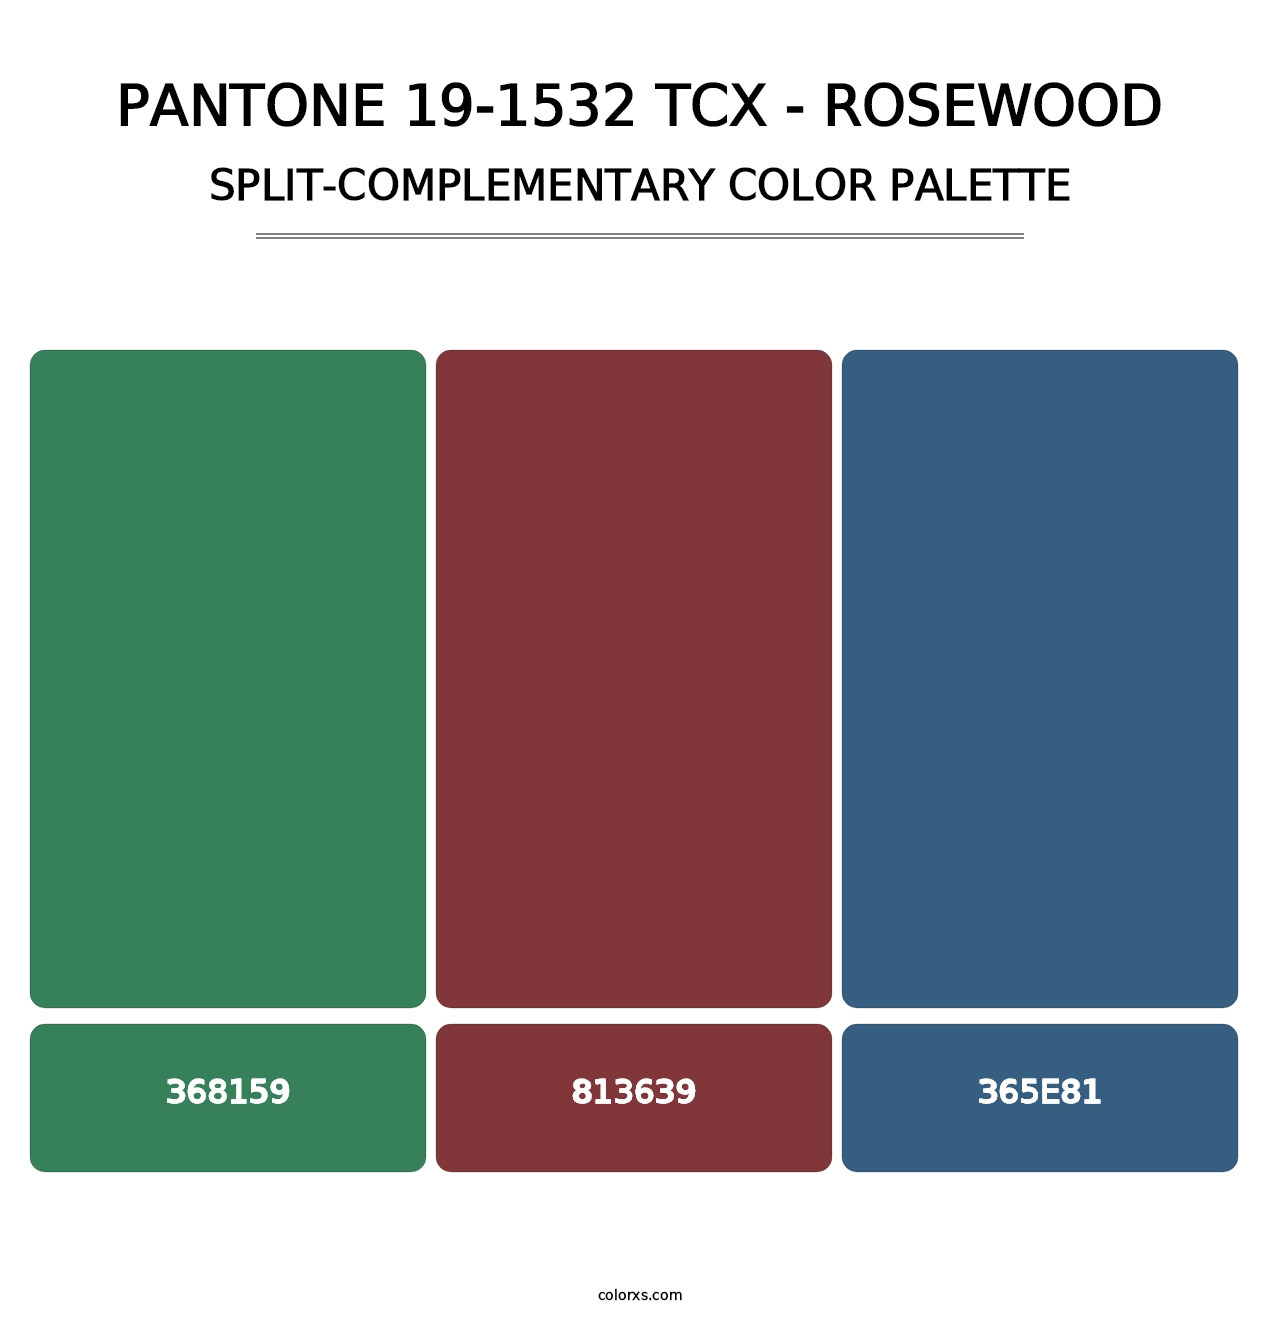 PANTONE 19-1532 TCX - Rosewood - Split-Complementary Color Palette